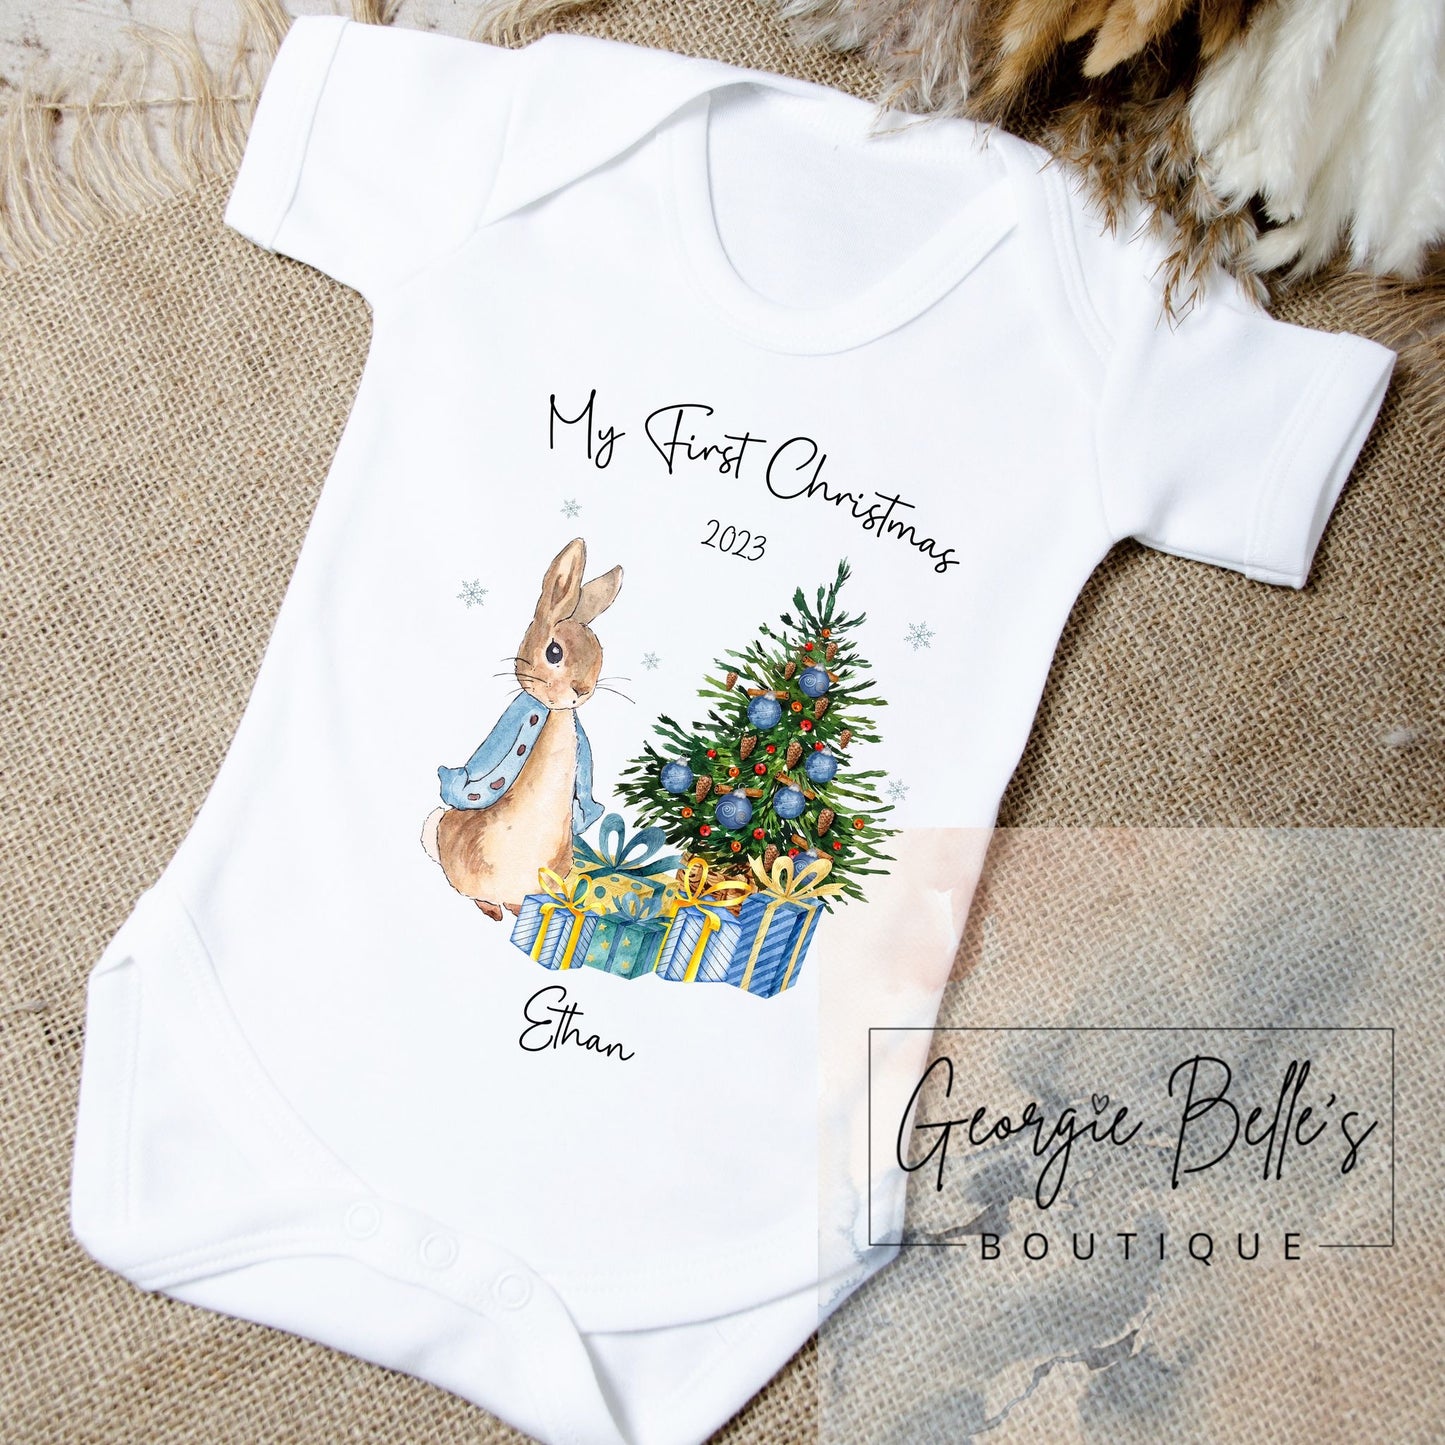 My 1st Christmas Vest / Babygrow - Blue Peter Rabbit Inspired Design